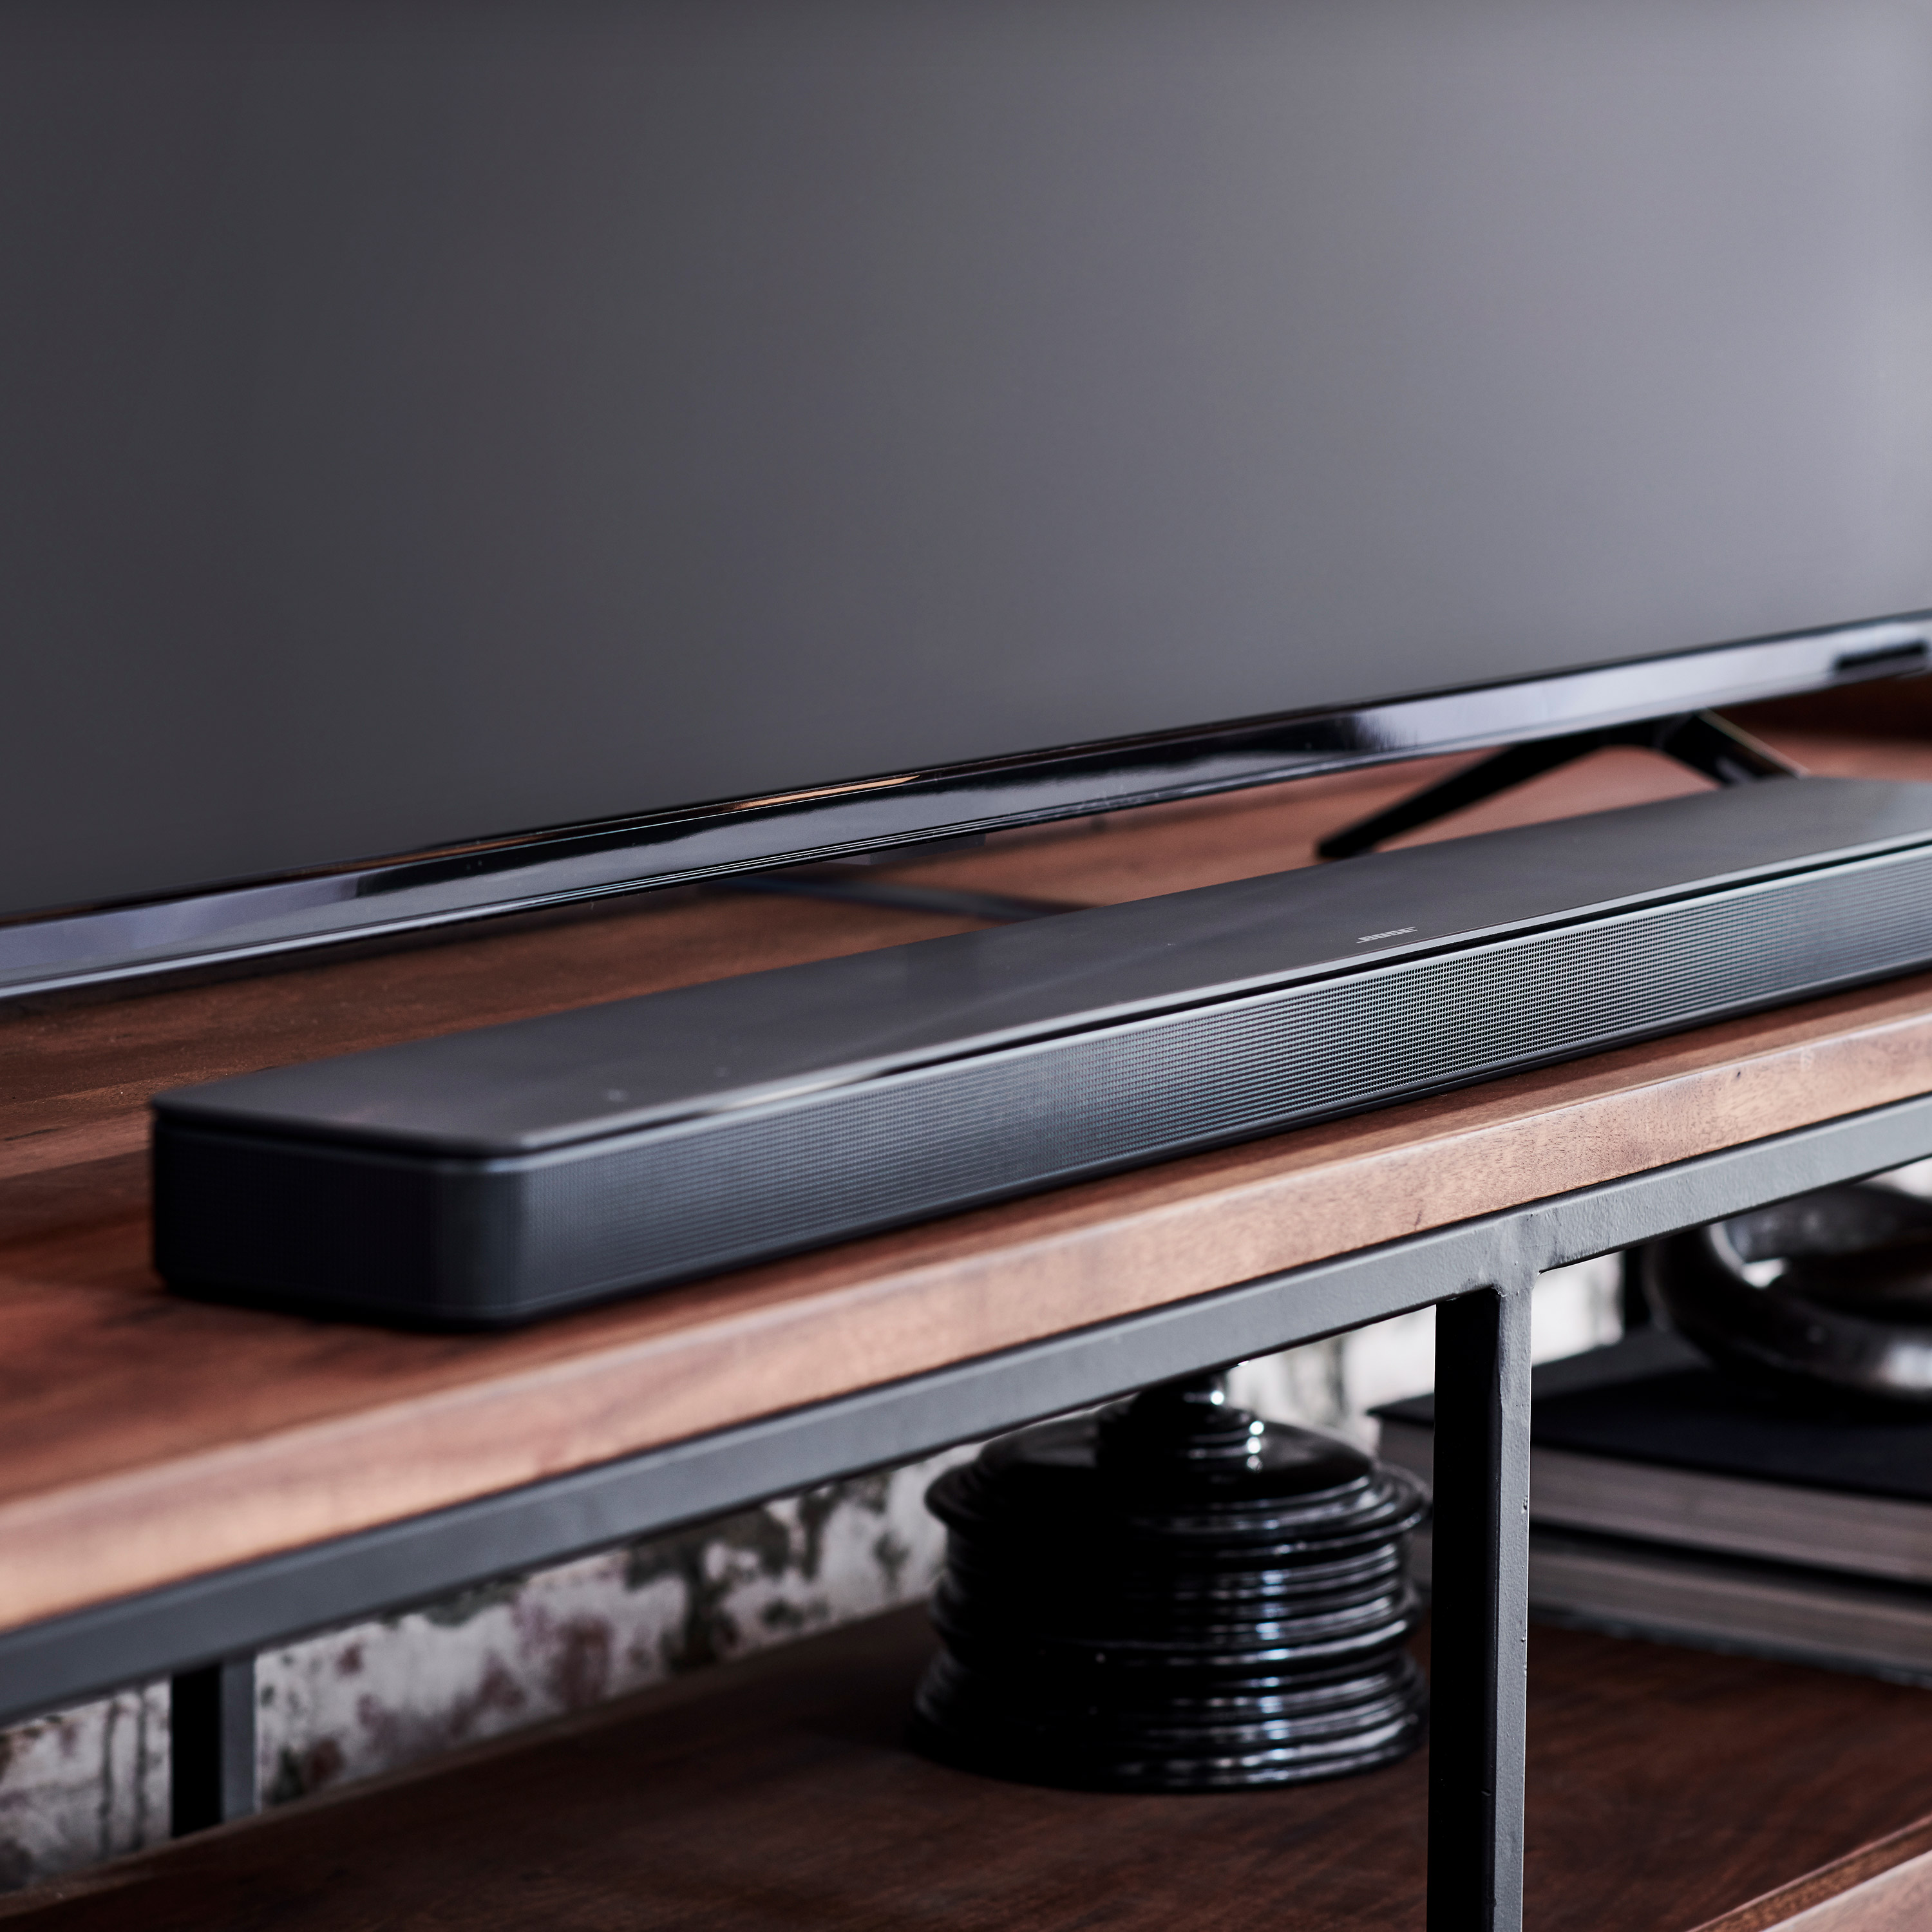 Bose smart speaker soundbars: Product image of the Bose Souundbar 500 from Bose press release. The soundbar sits ona wood TV stand with a TV above it.